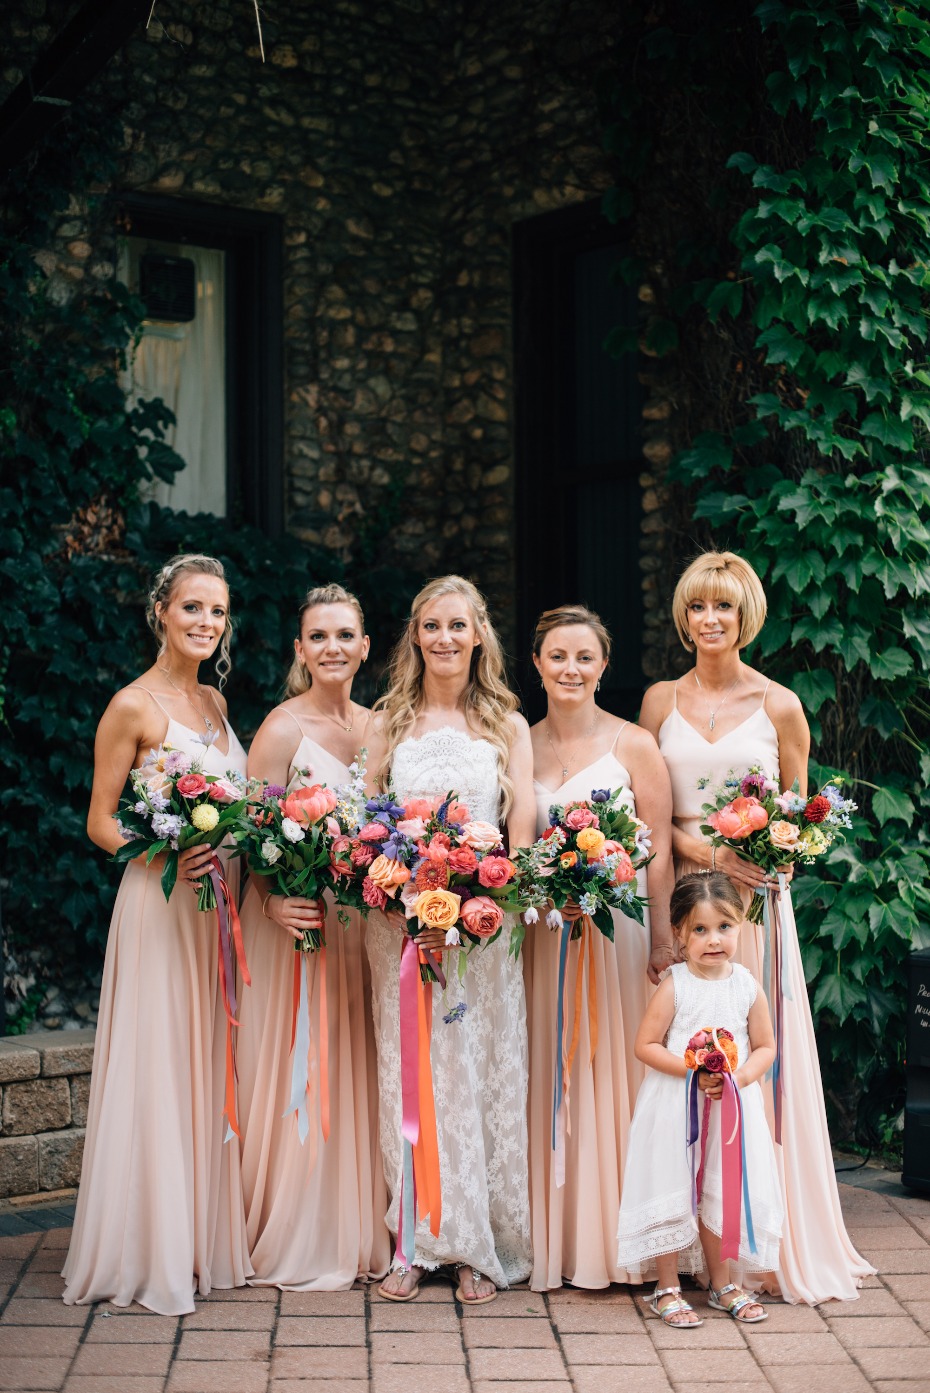 Colorful bridesmaid bouquets